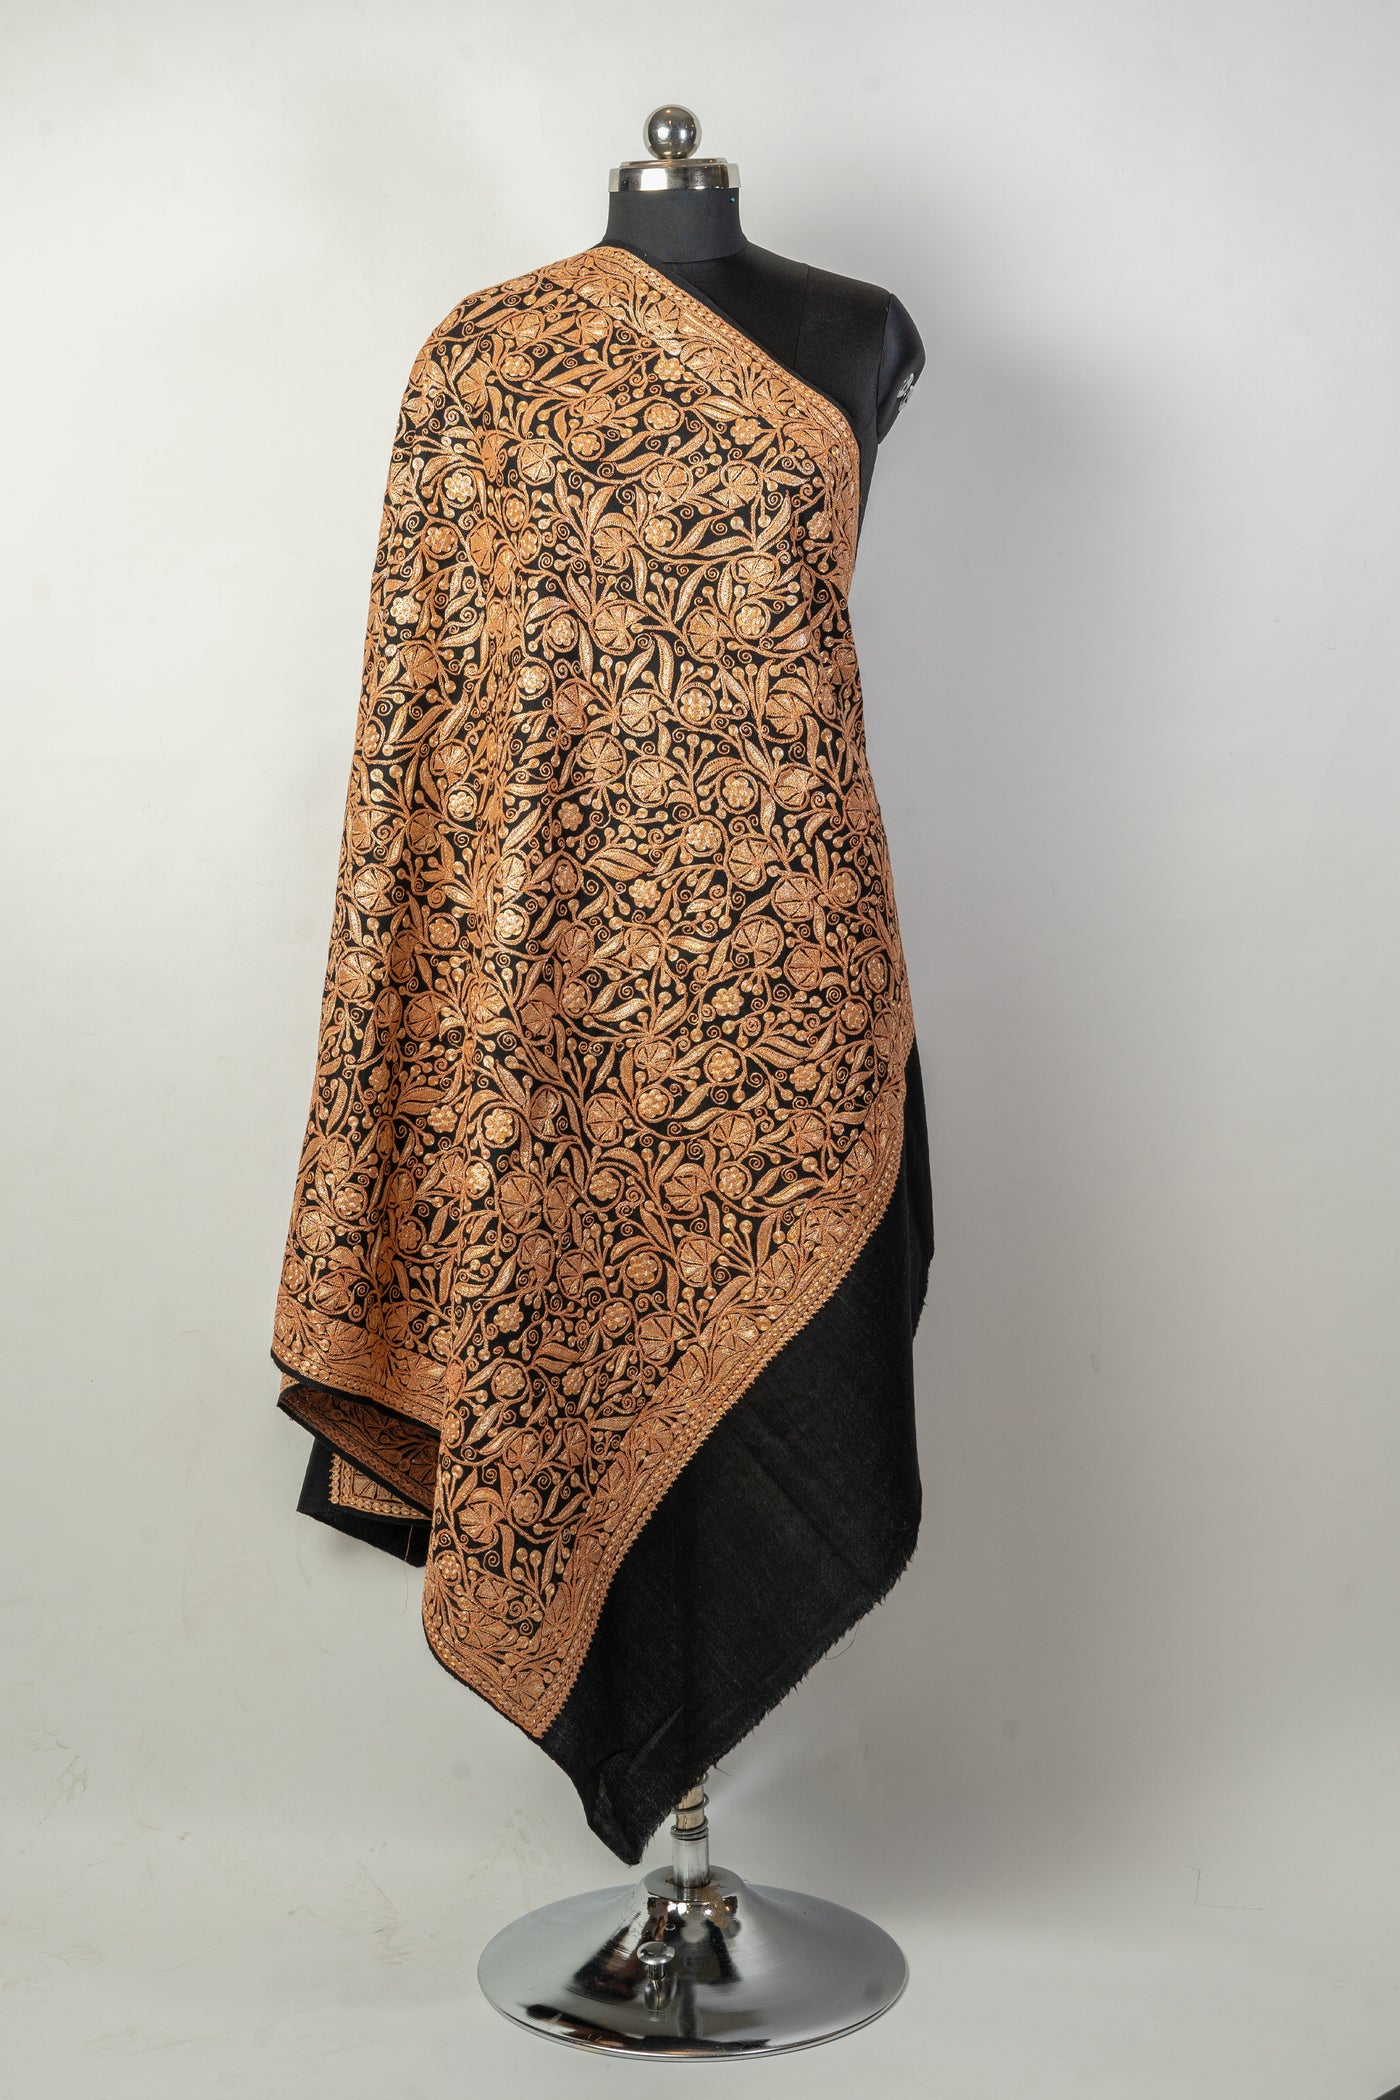 Elegant Tilla Embroidery on Black Merino Wool Shawl